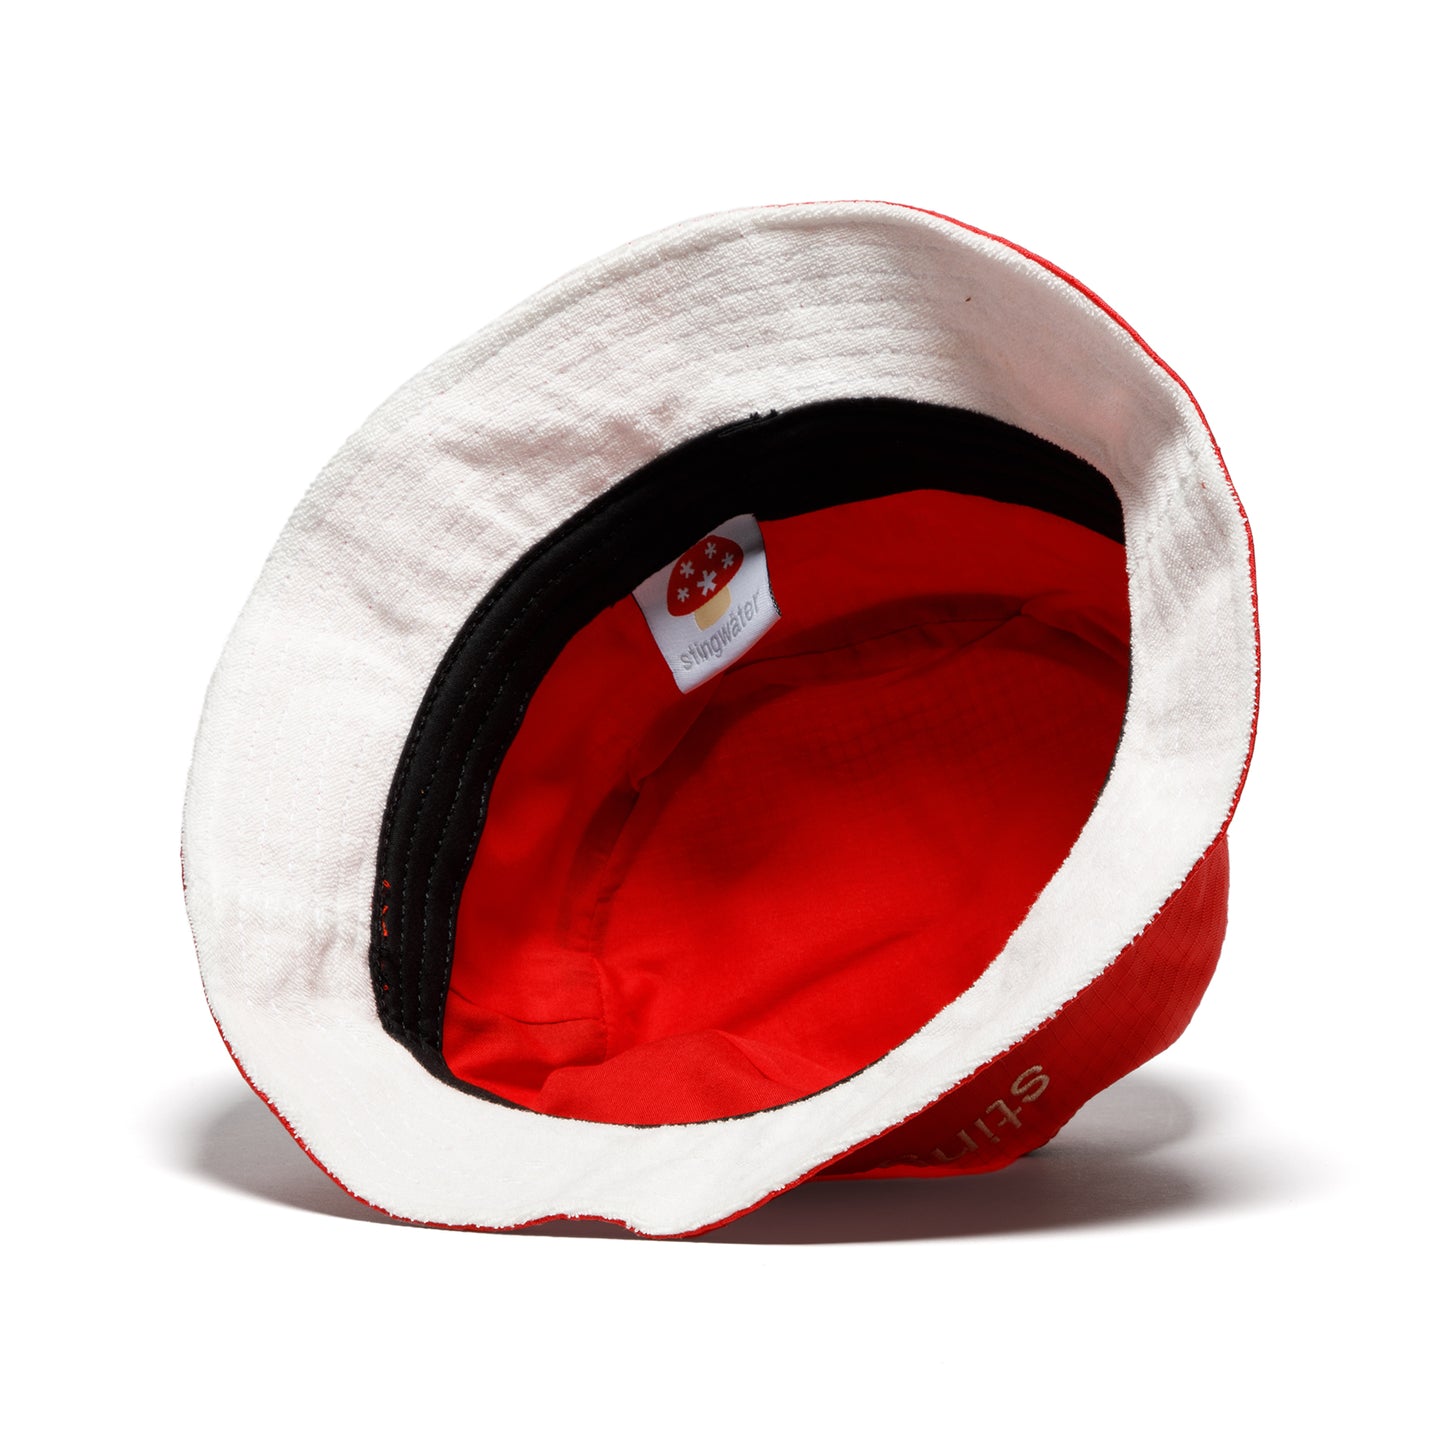 Stingwater Nylon Bucket Hat (Red)